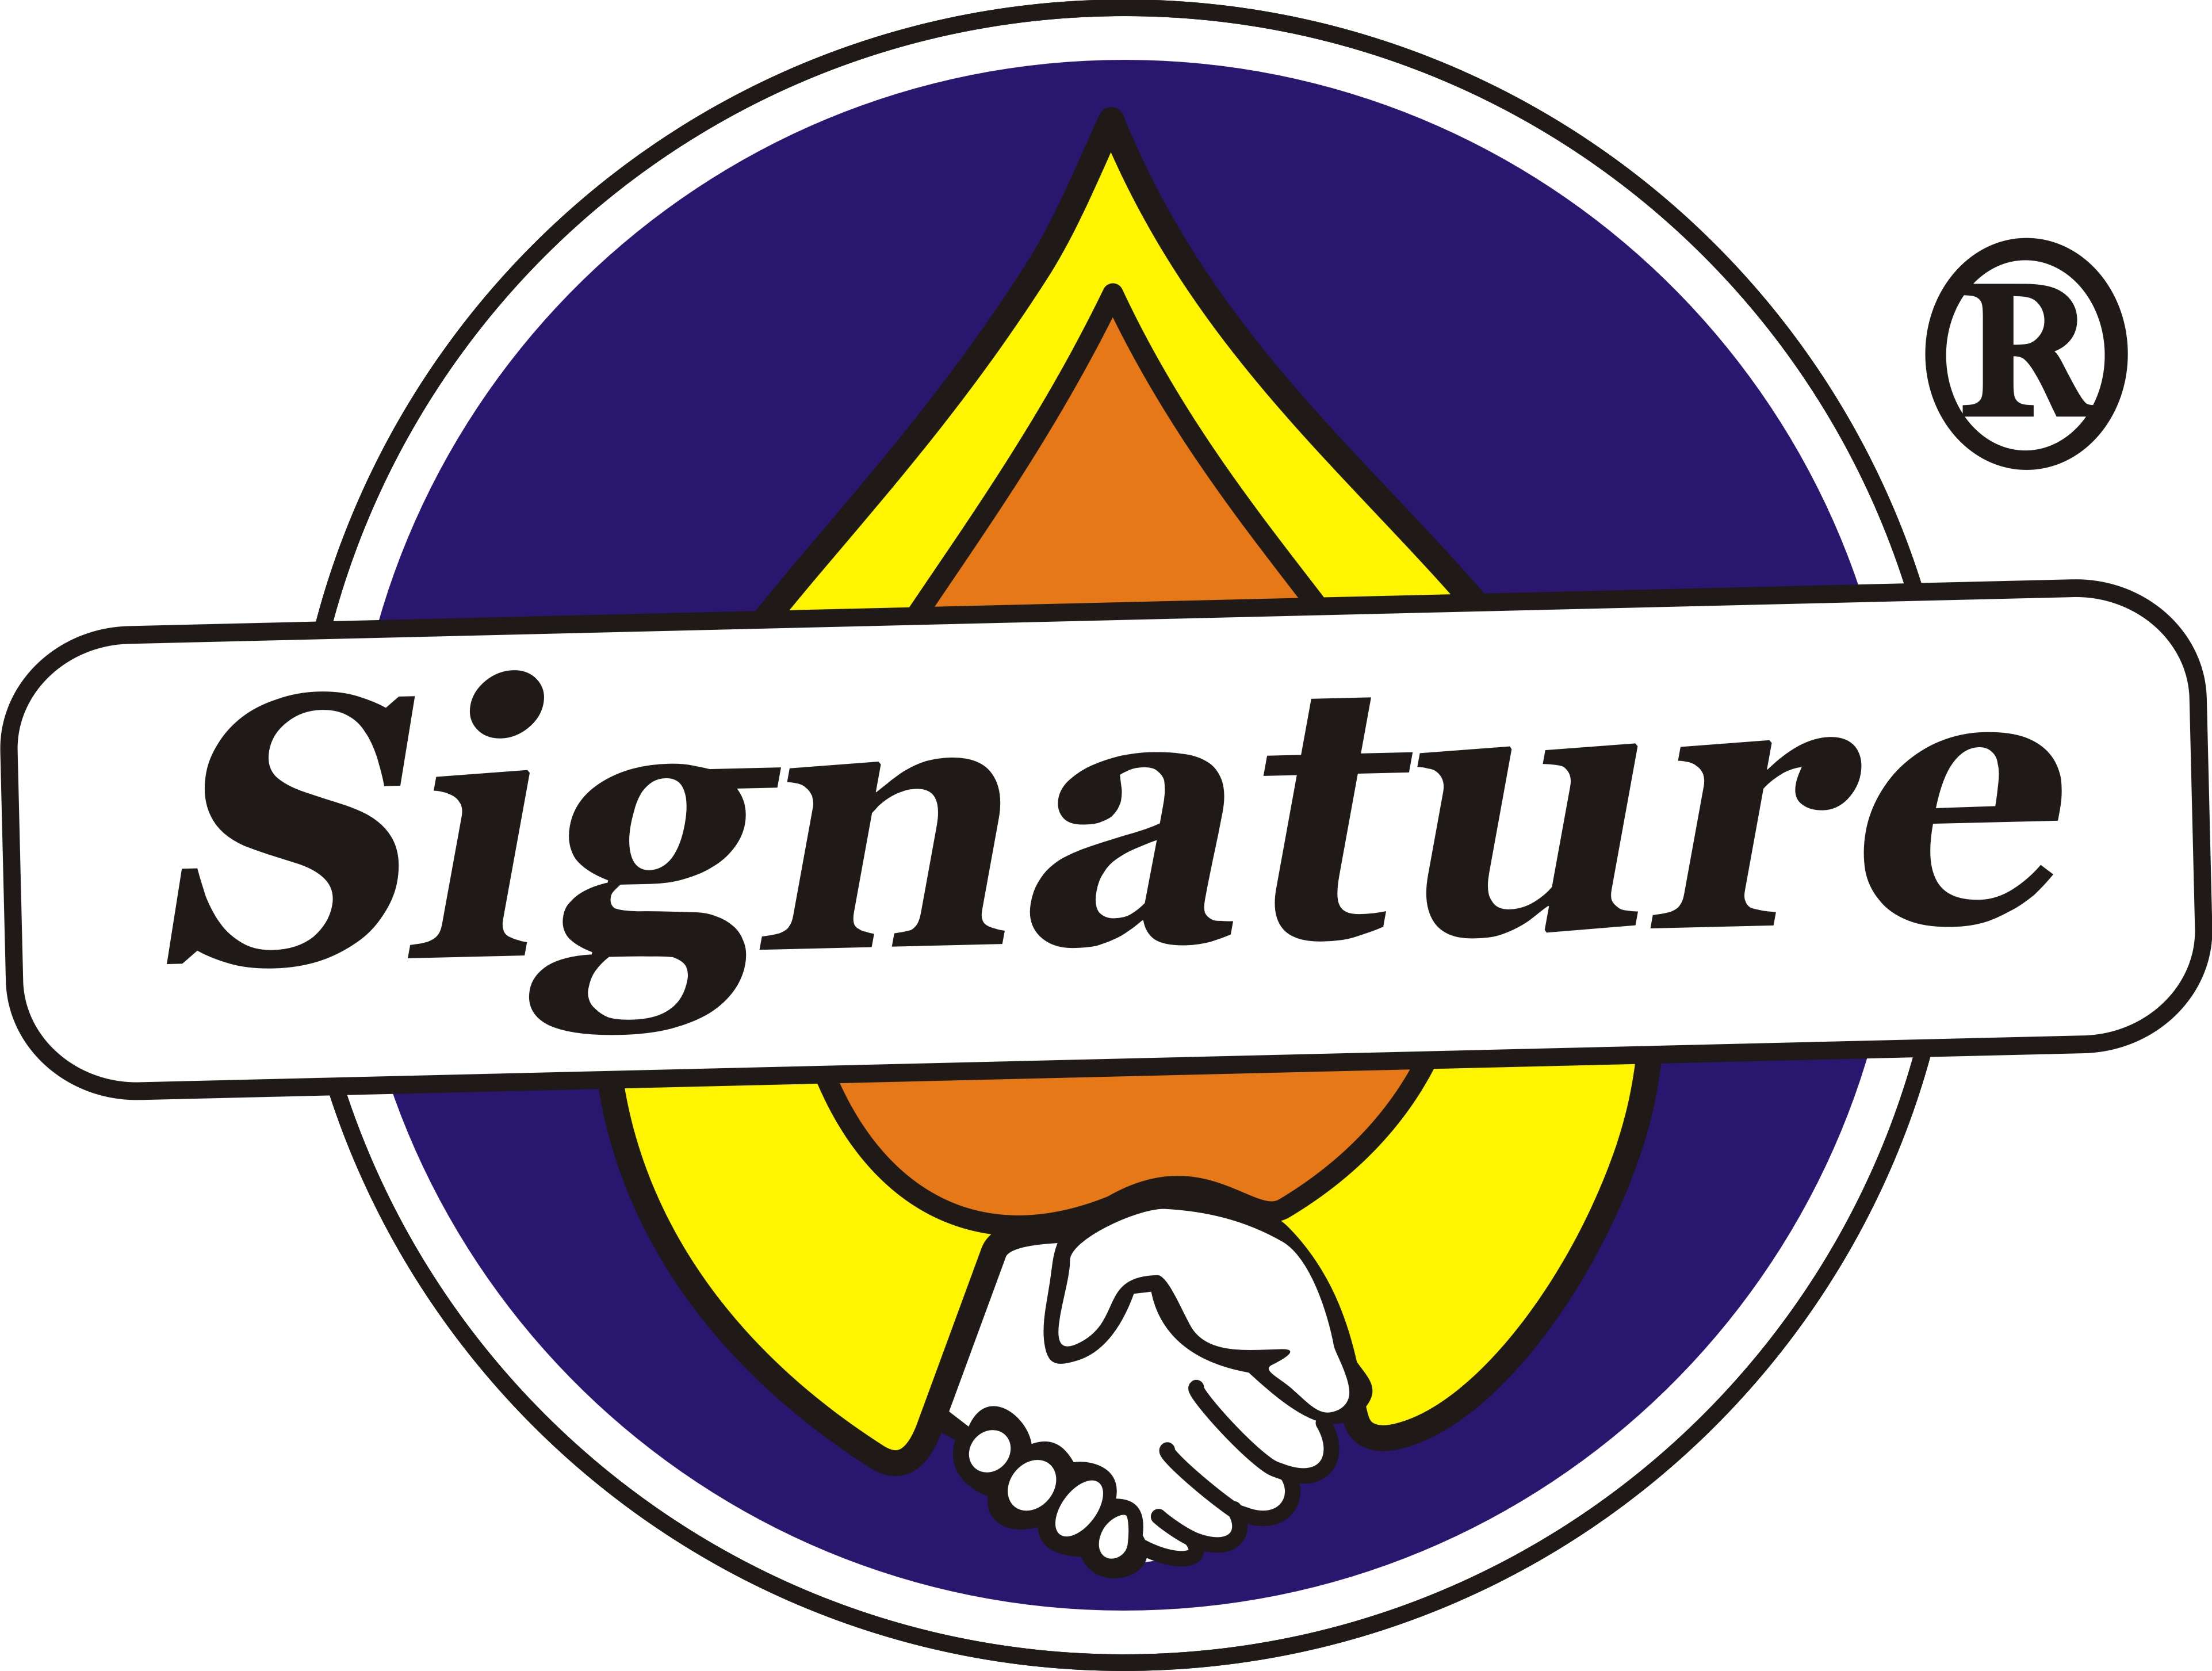 Signature Lubricants